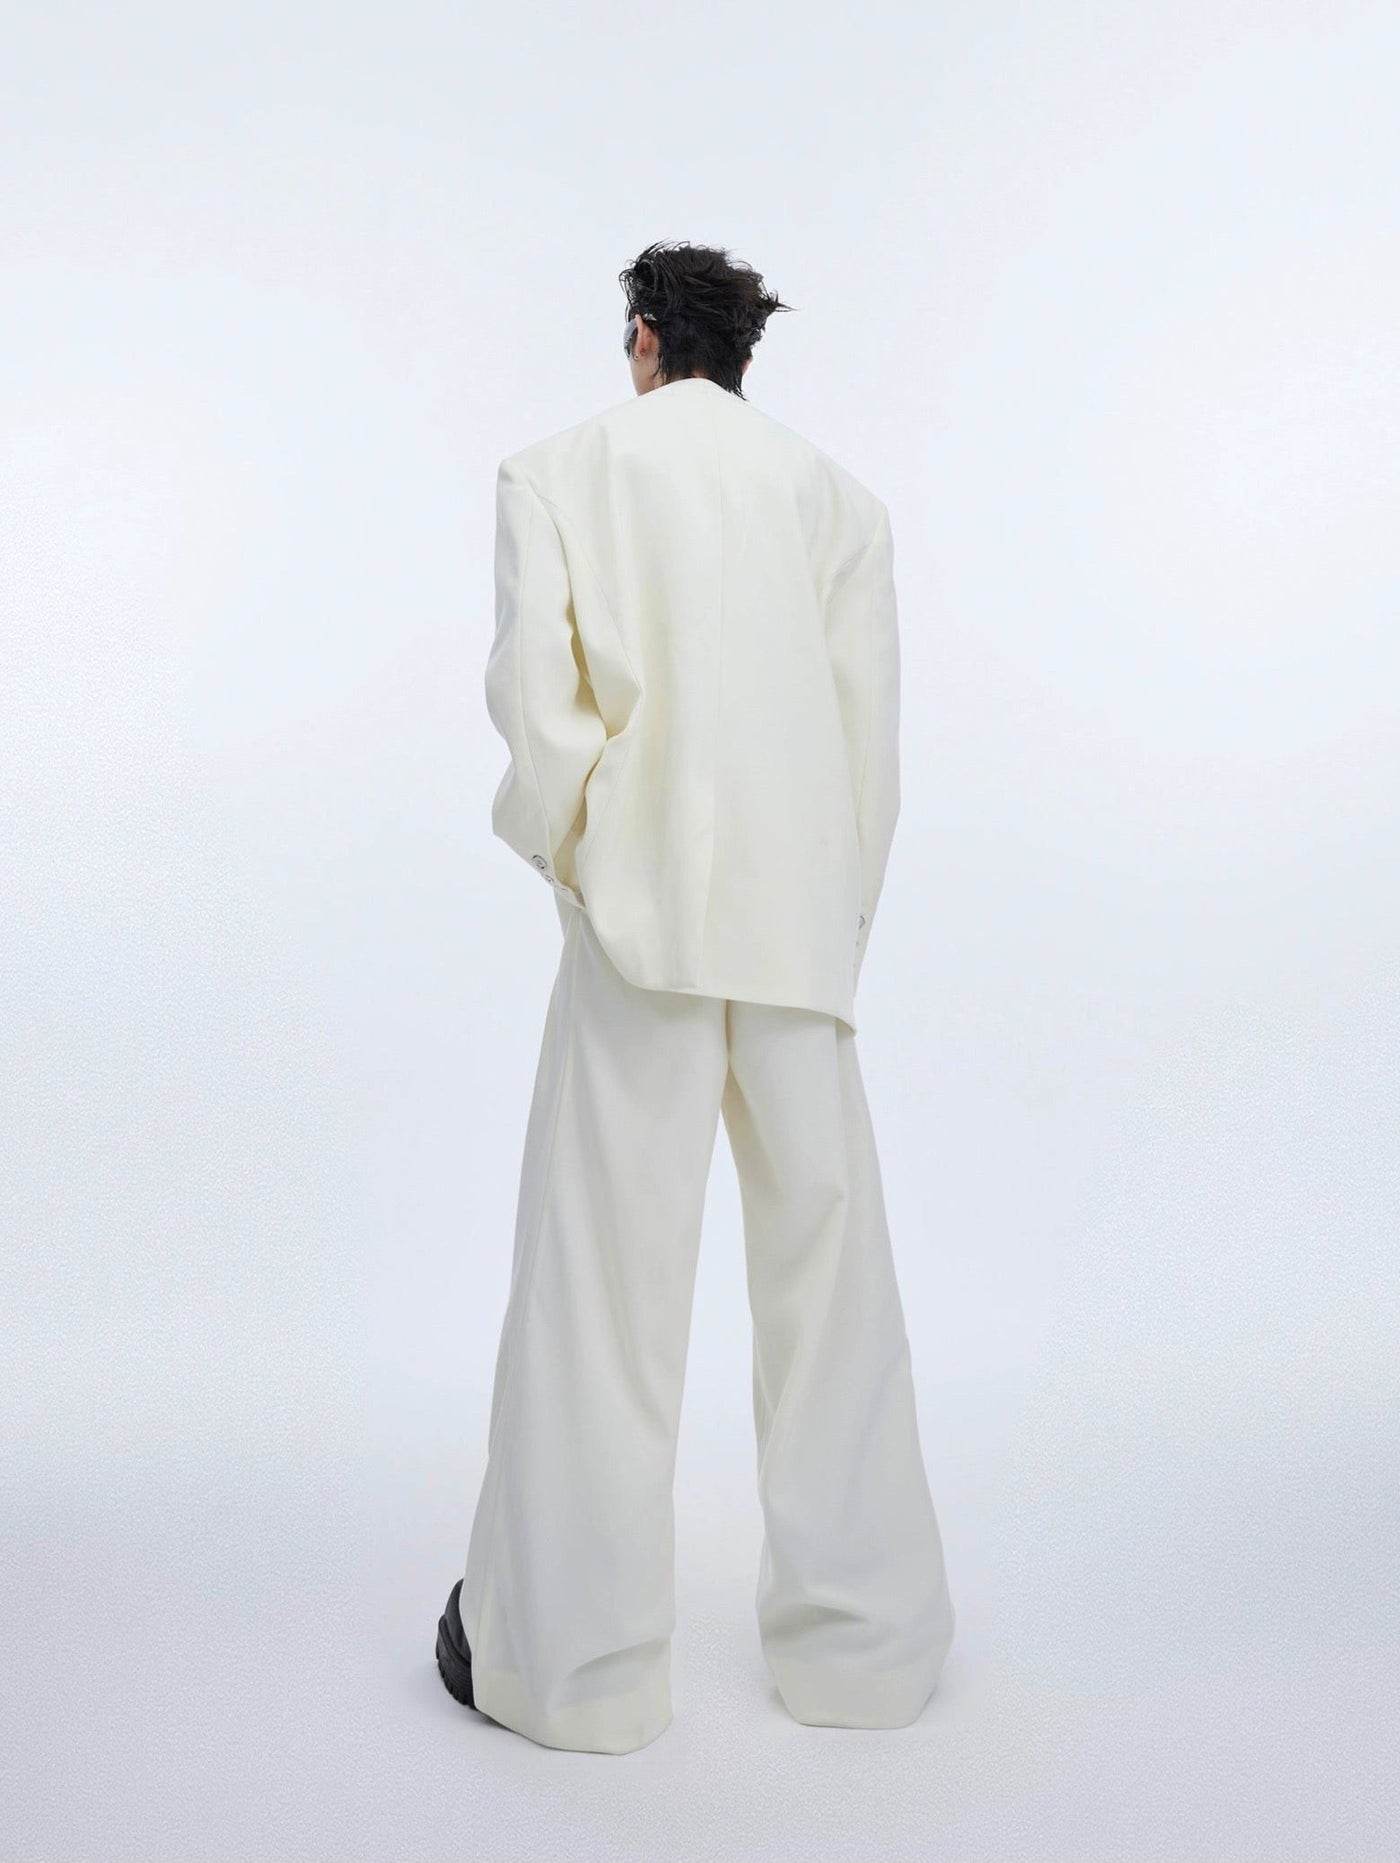 Oversized Buttoned Blazer & Pants Set Korean Street Fashion Clothing Set By Argue Culture Shop Online at OH Vault